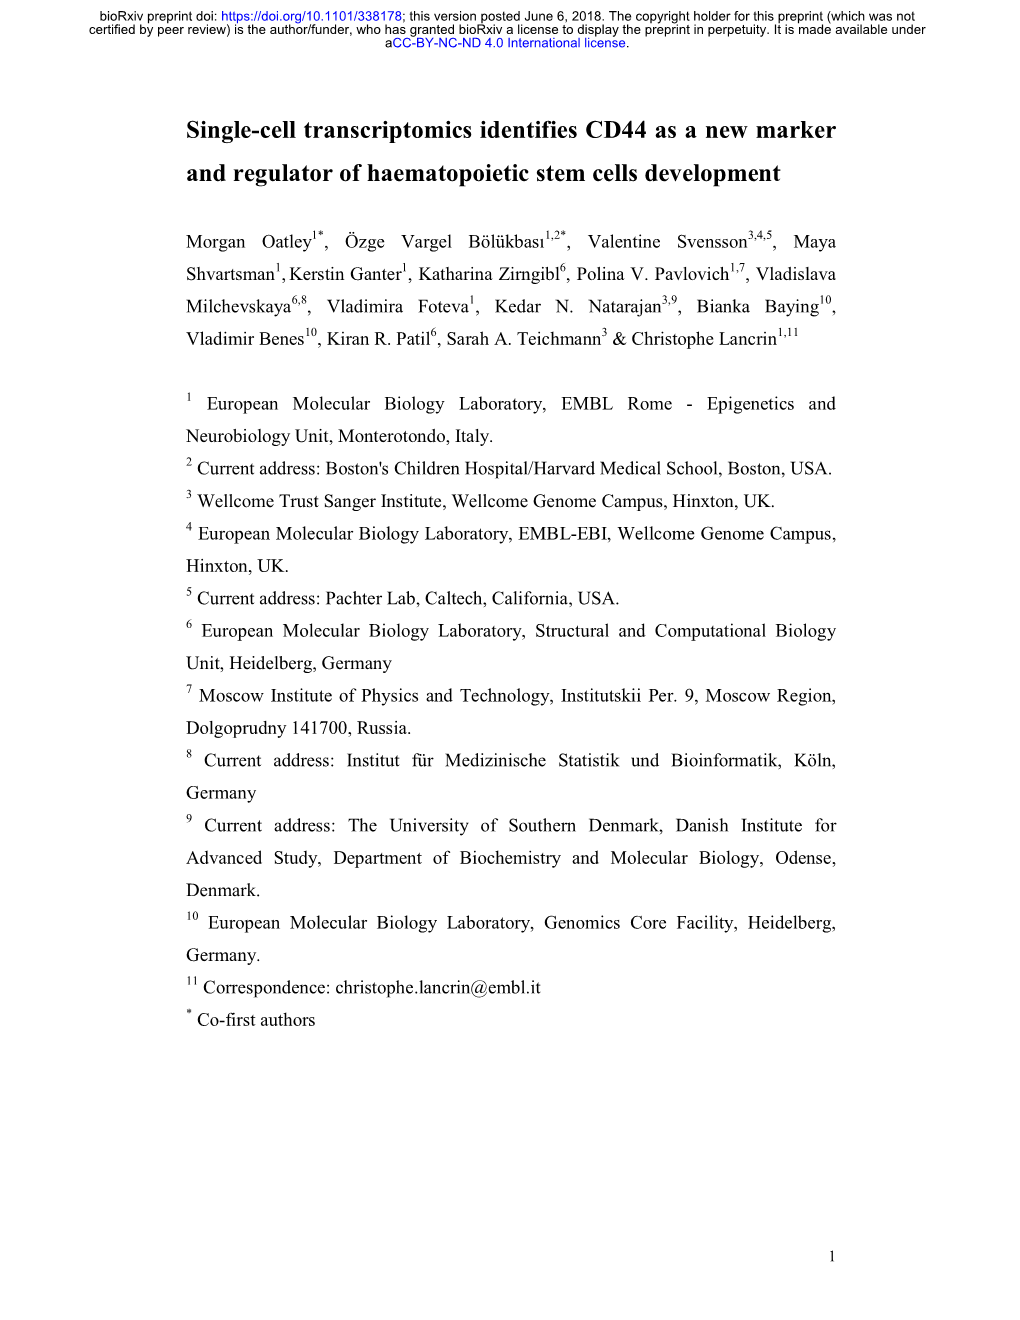 Single-Cell Transcriptomics Identifies CD44 As a New Marker and Regulator of Haematopoietic Stem Cells Development